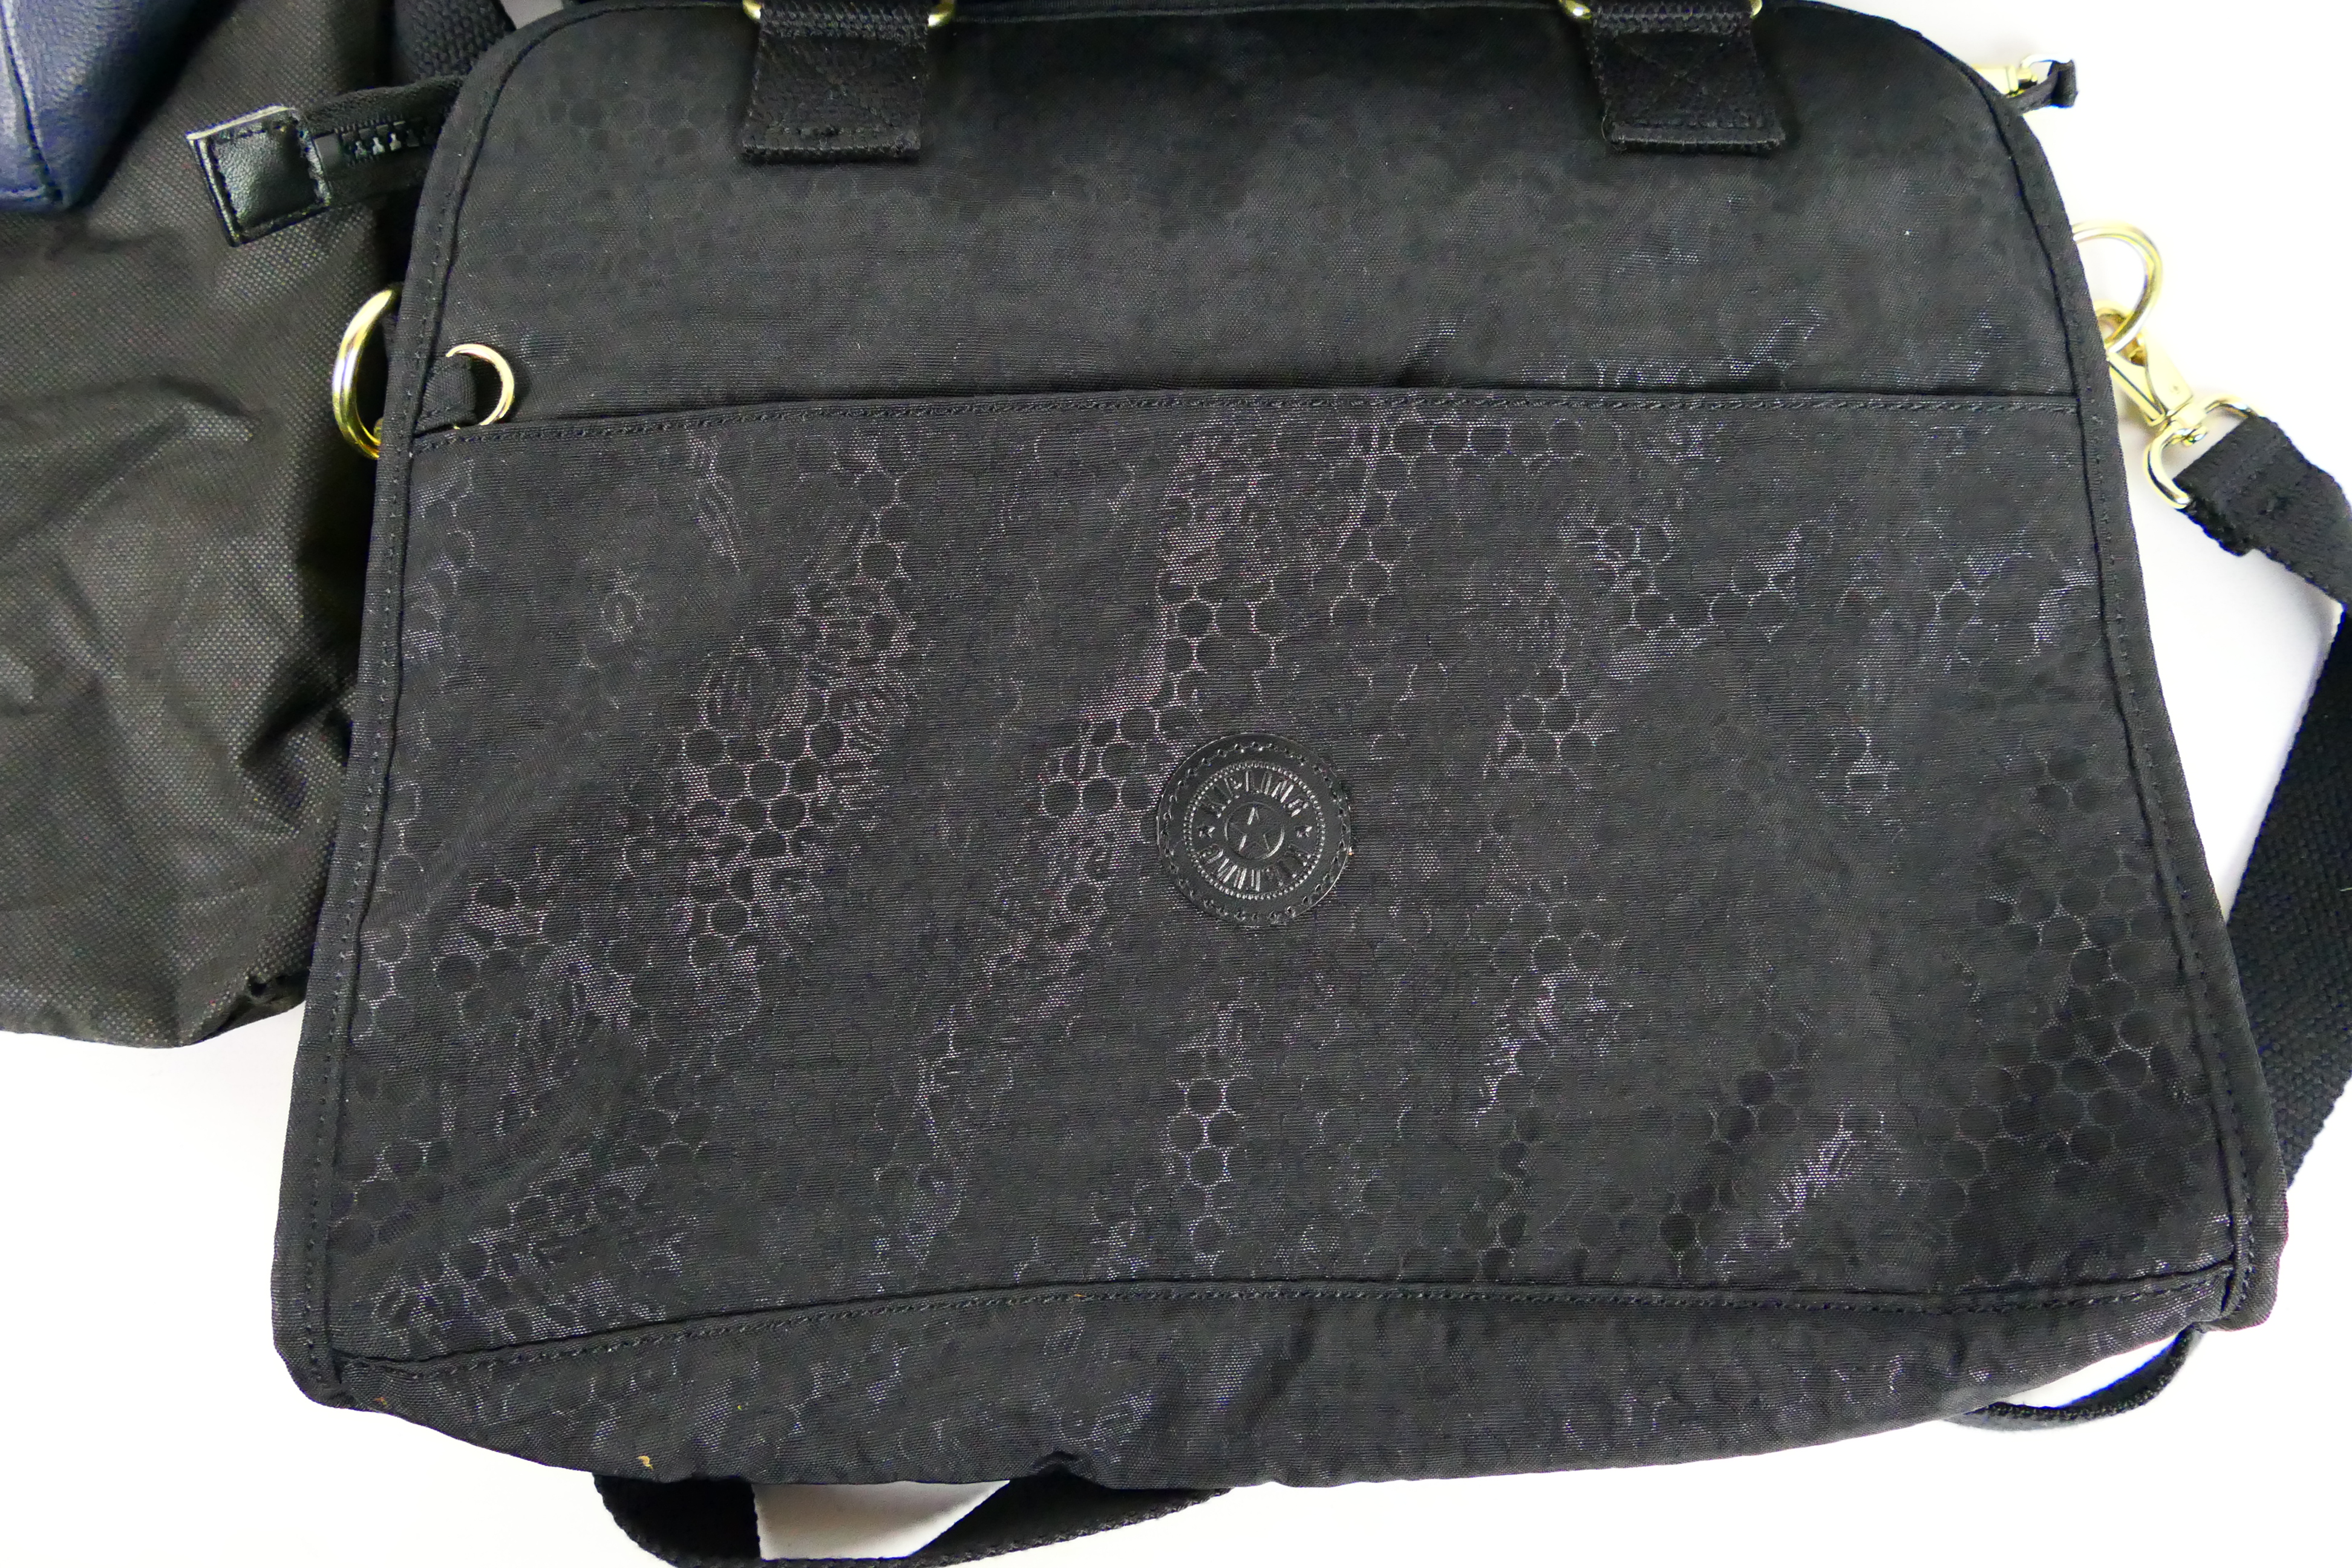 Kipling, Catwalk Collection Handbags - 4 - Image 5 of 5